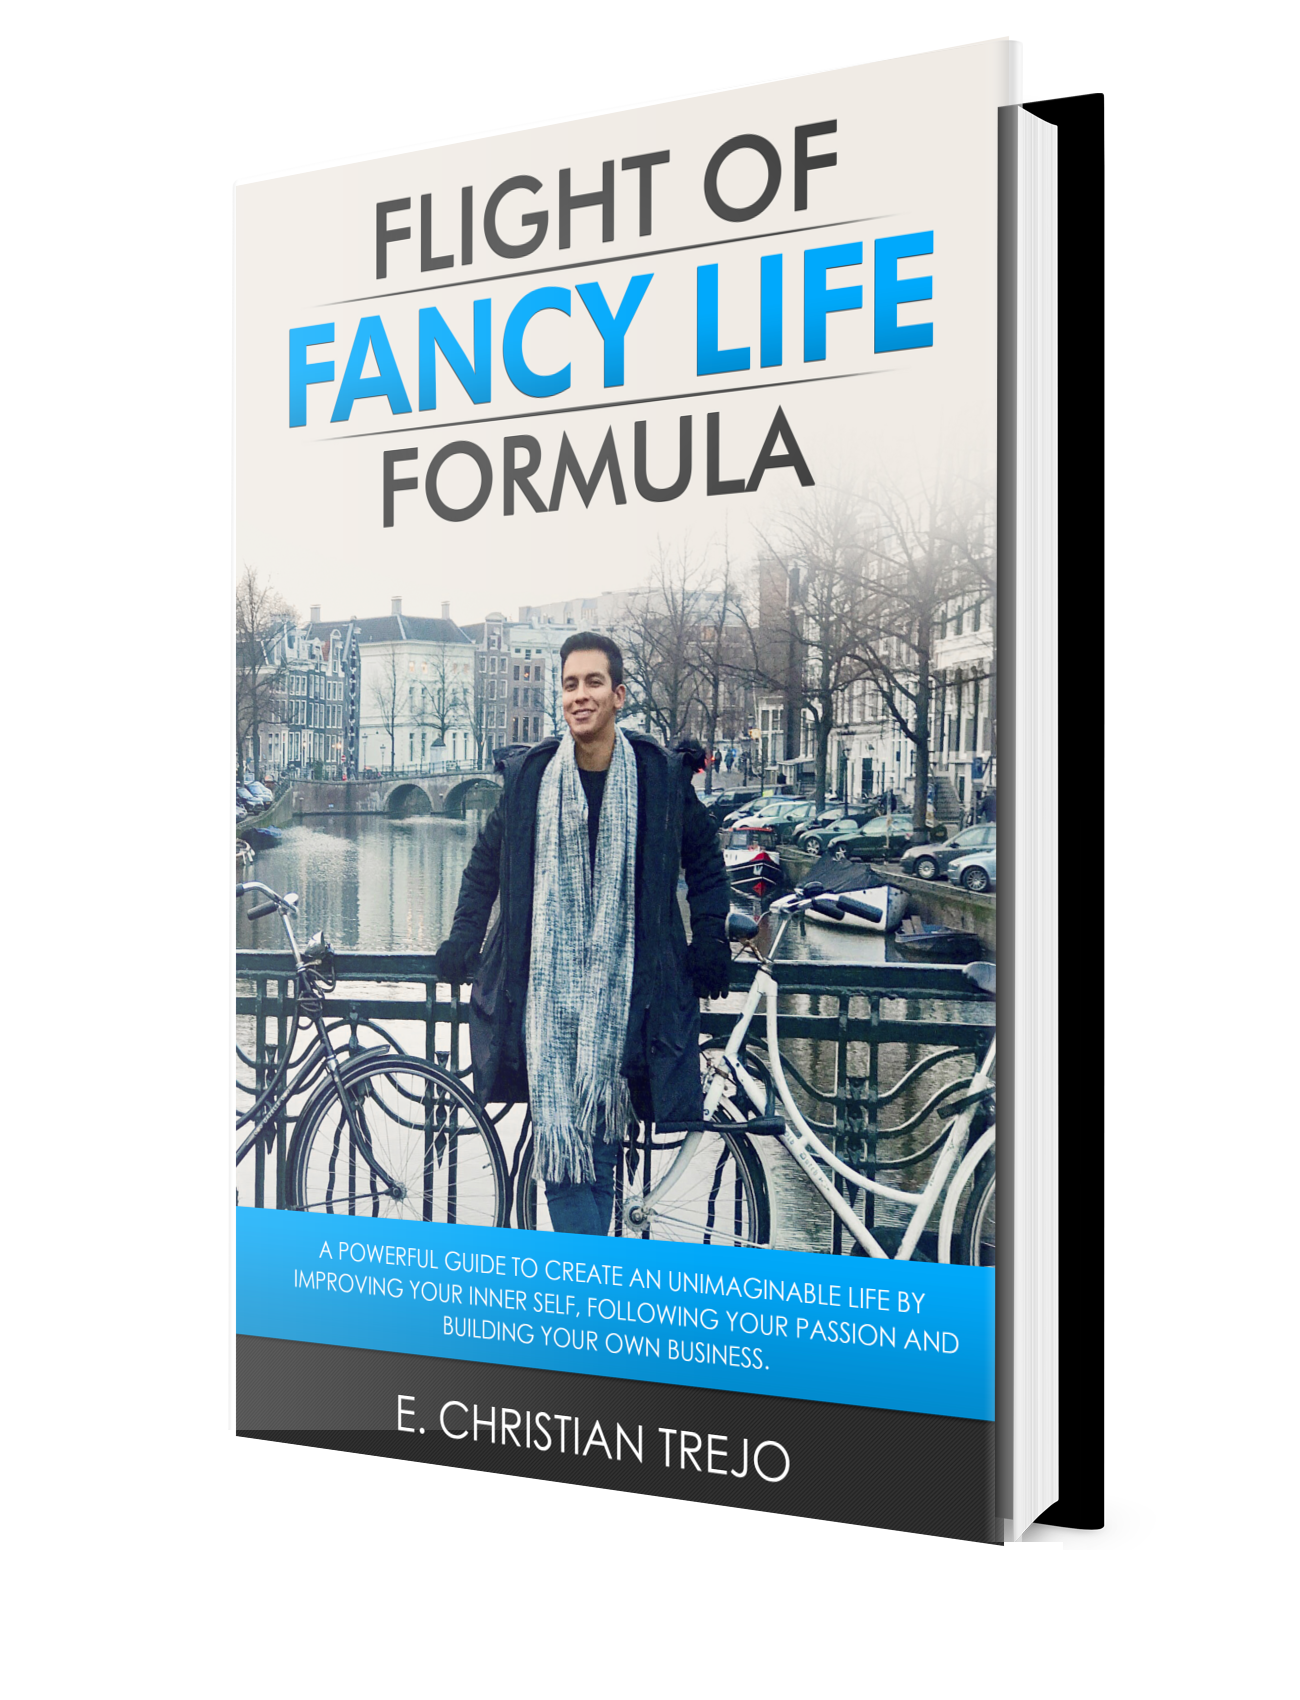 Flight of Fancy Life Formula by E. Christian Trejo